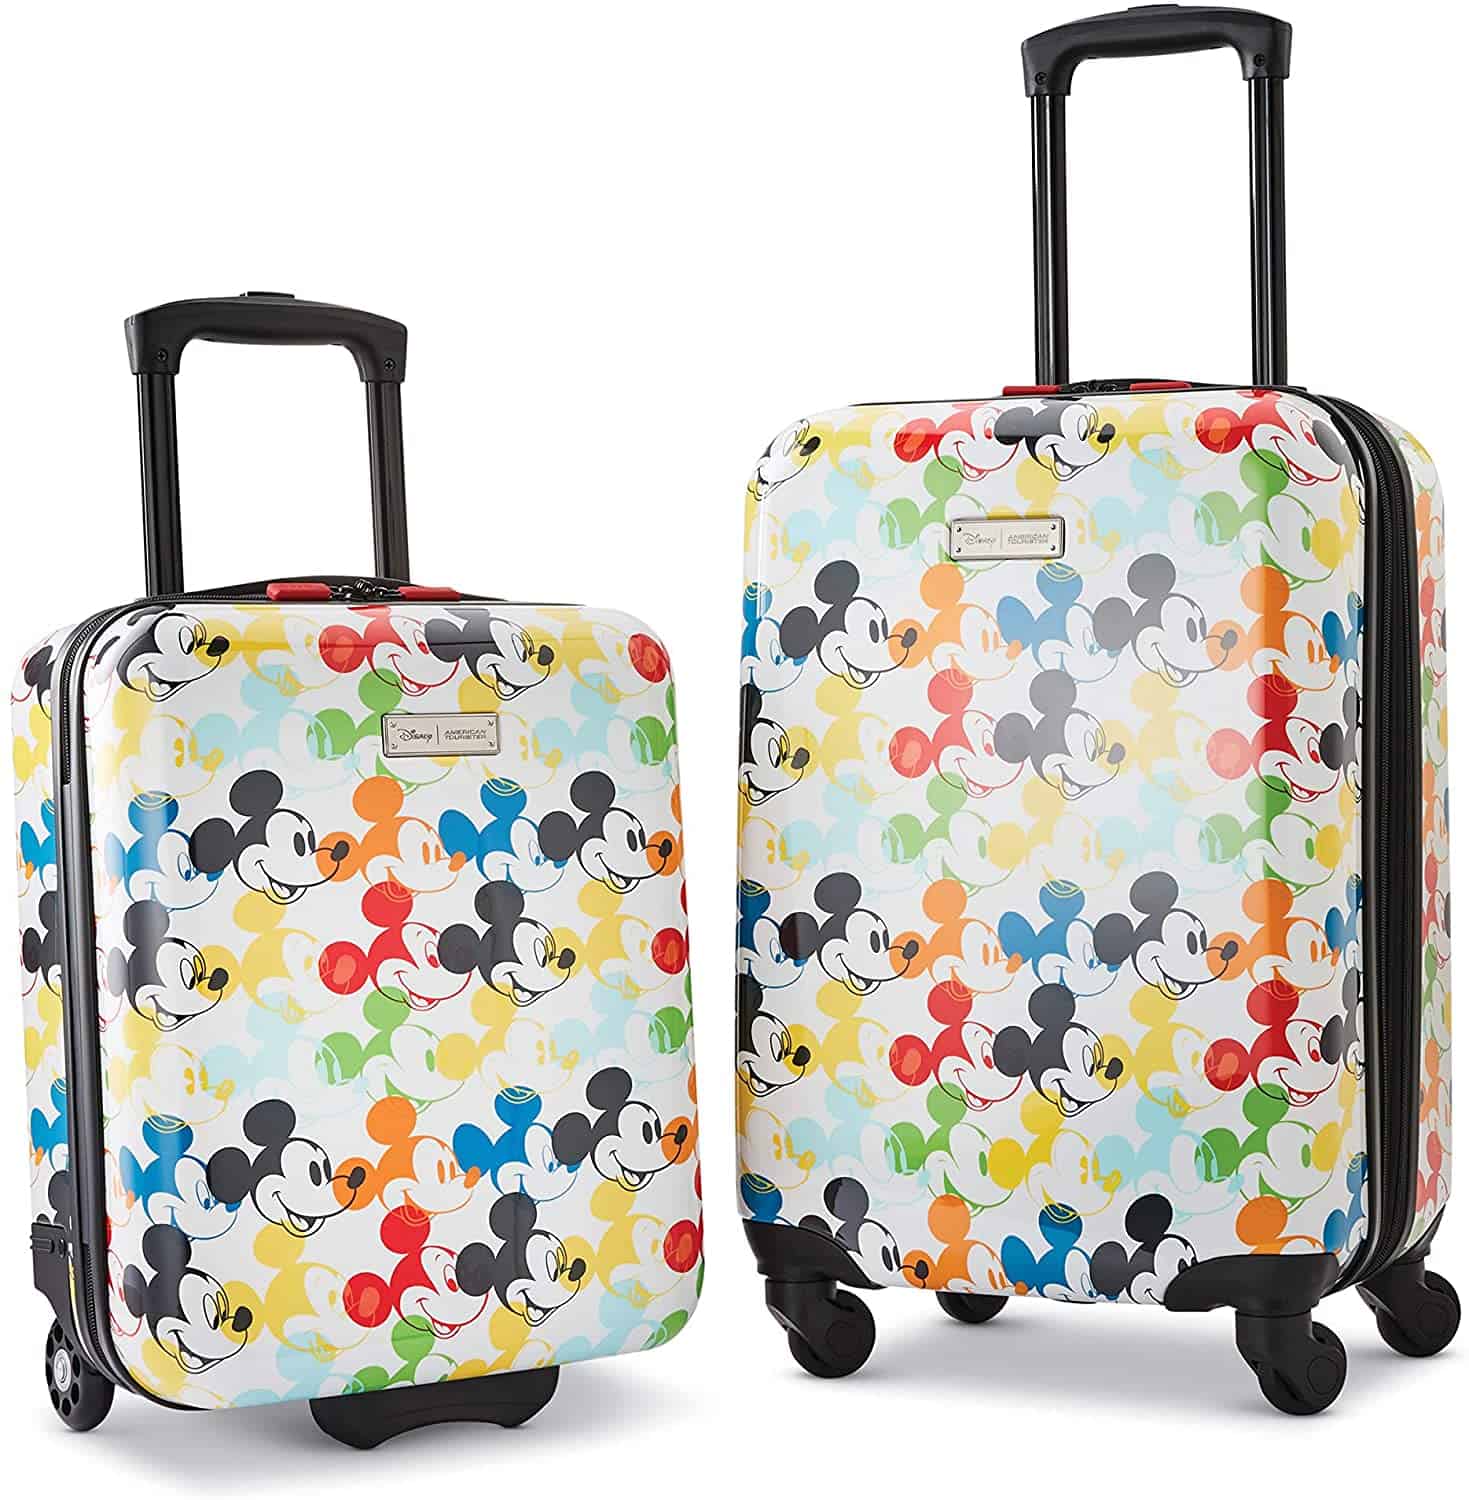 Mickey Mouse Hardside Luggage 2-Pc Set ONLY $109.99 (Reg $200)